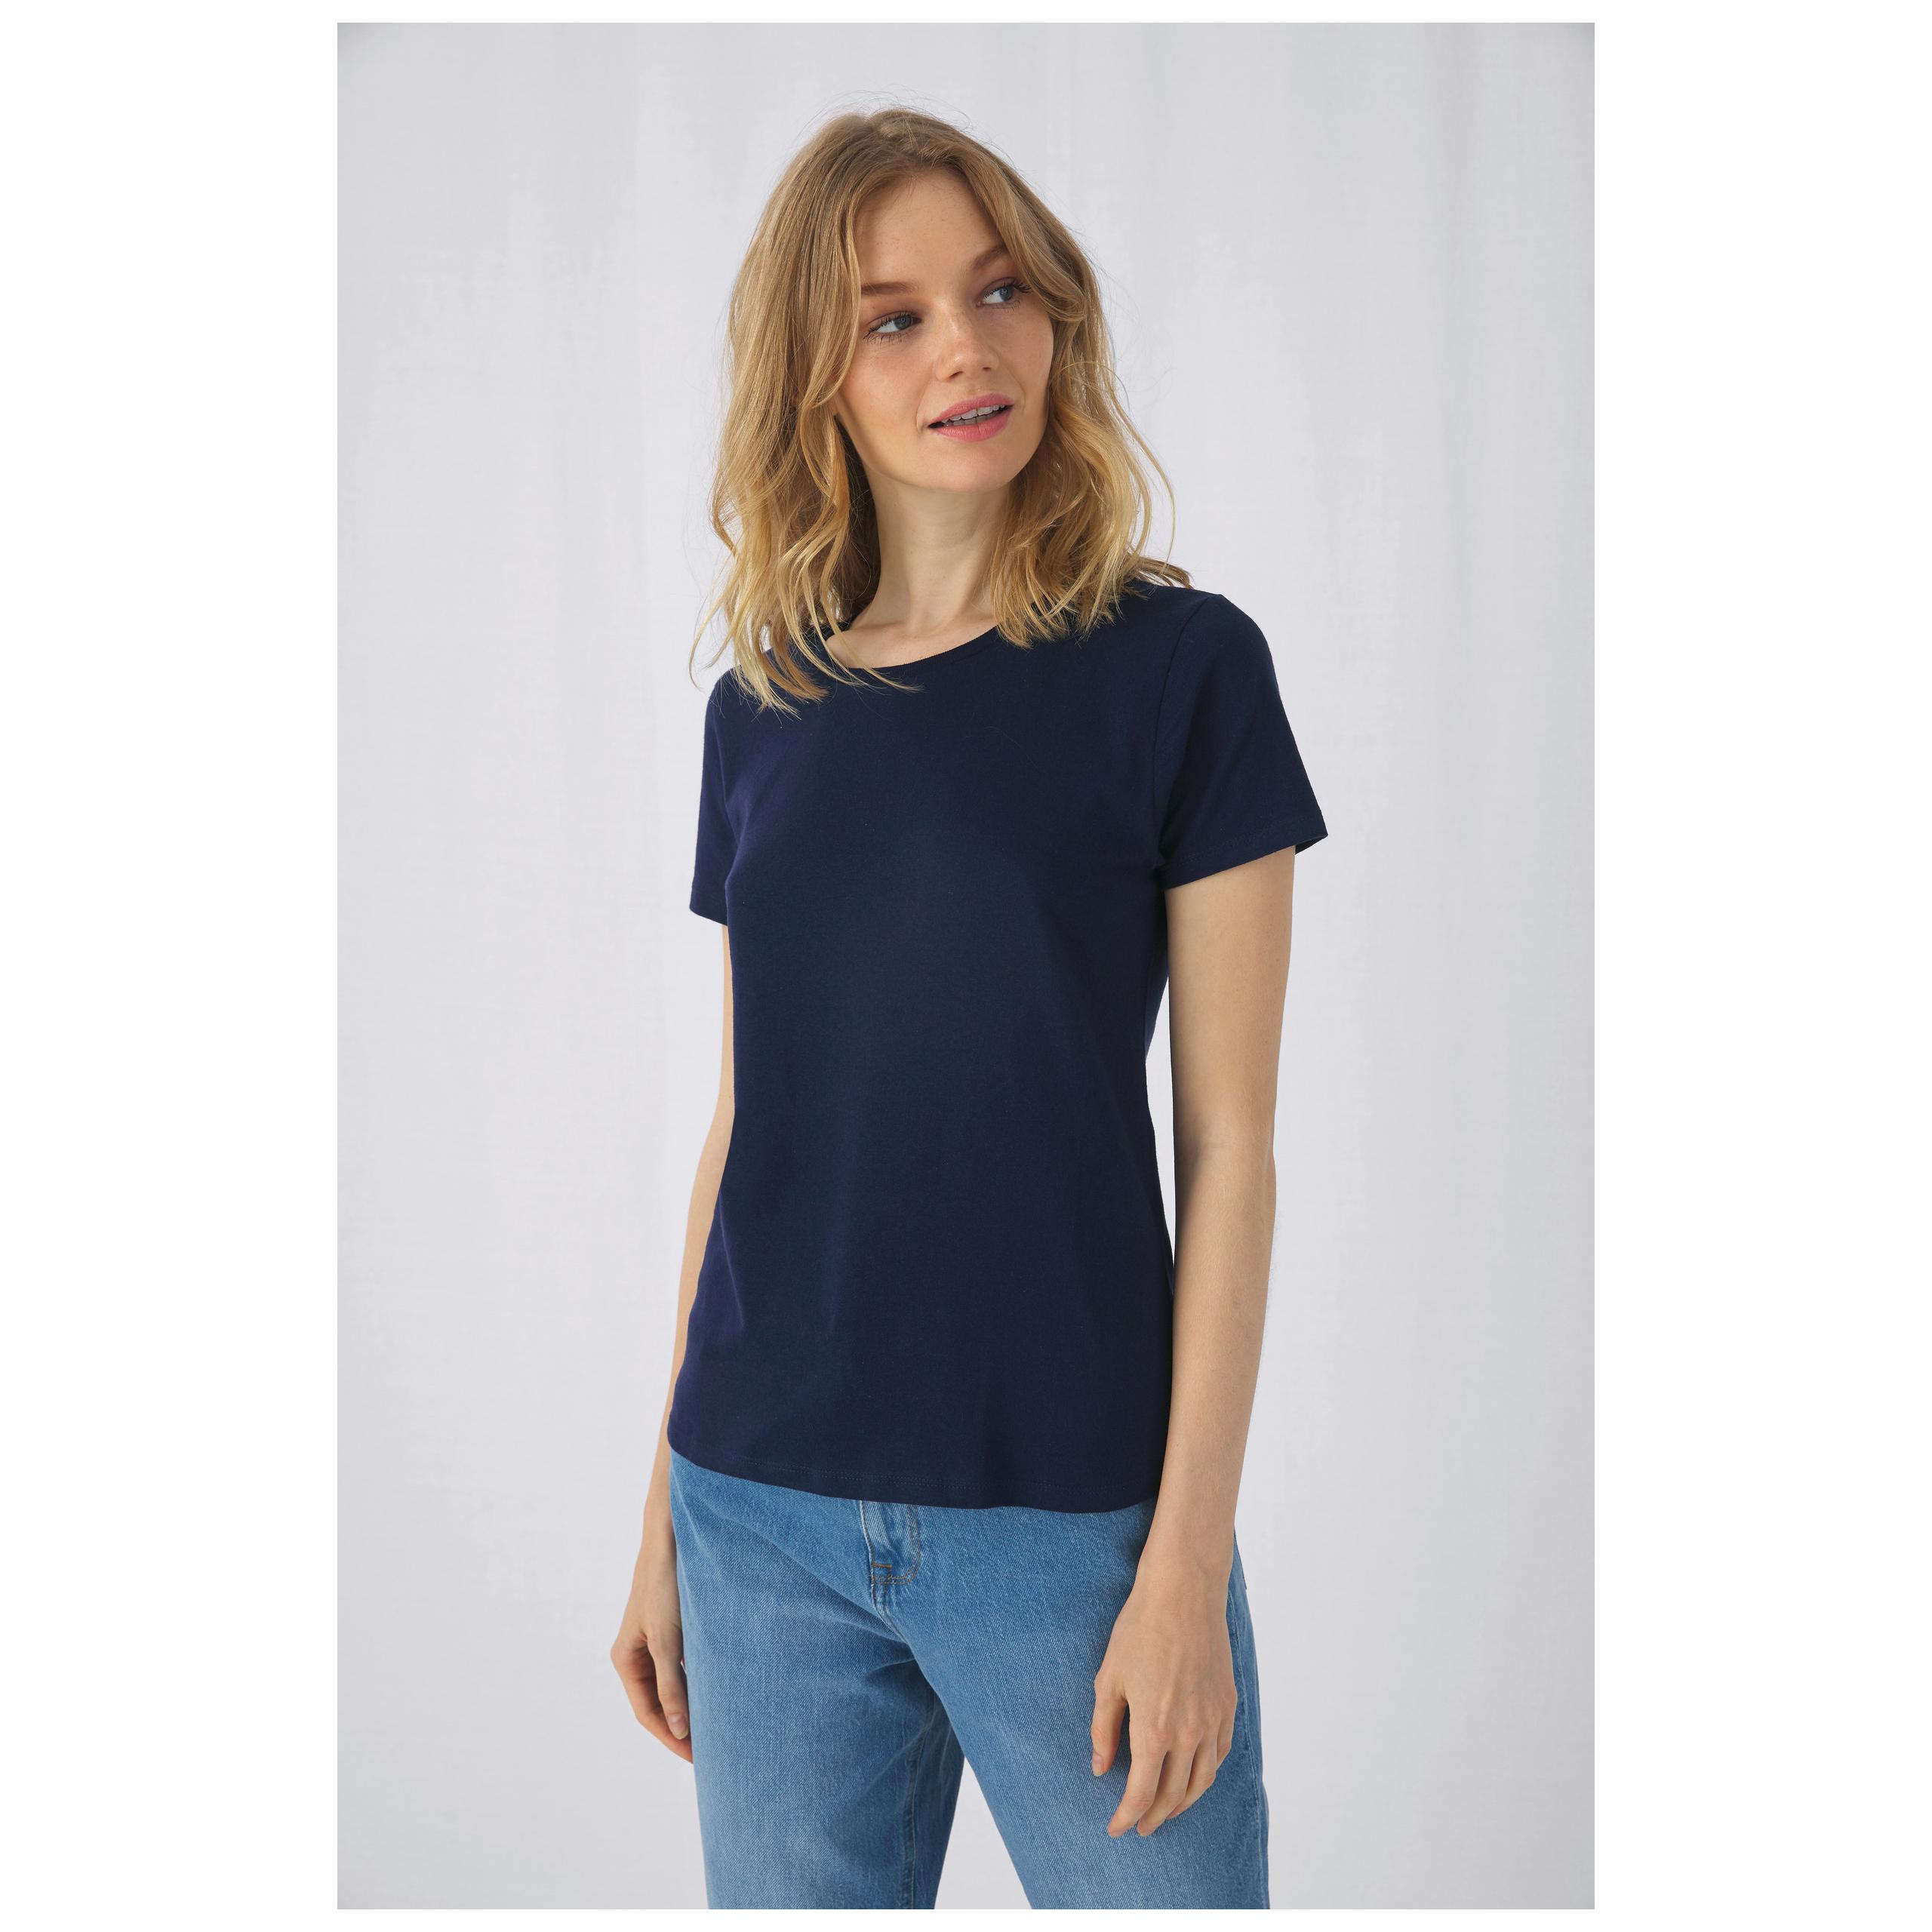 B&C - T-shirt femme #E150 - Apricot - L